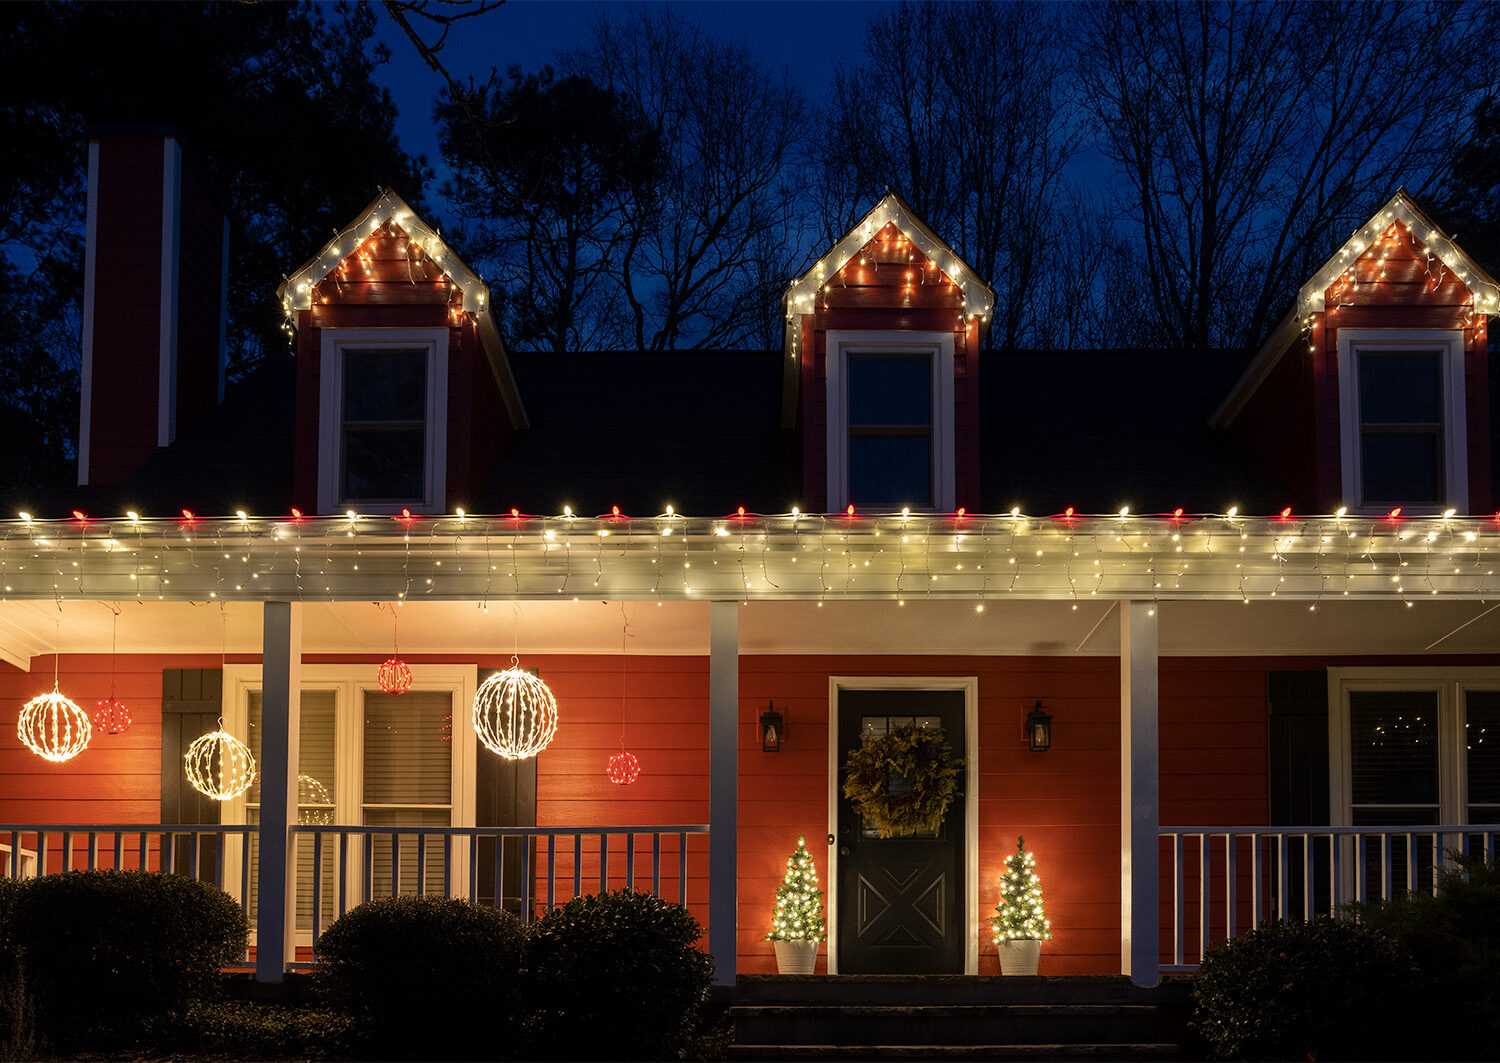 Outdoor Christmas Decorations - 15 Over-the-Top Ideas - Bob Vila